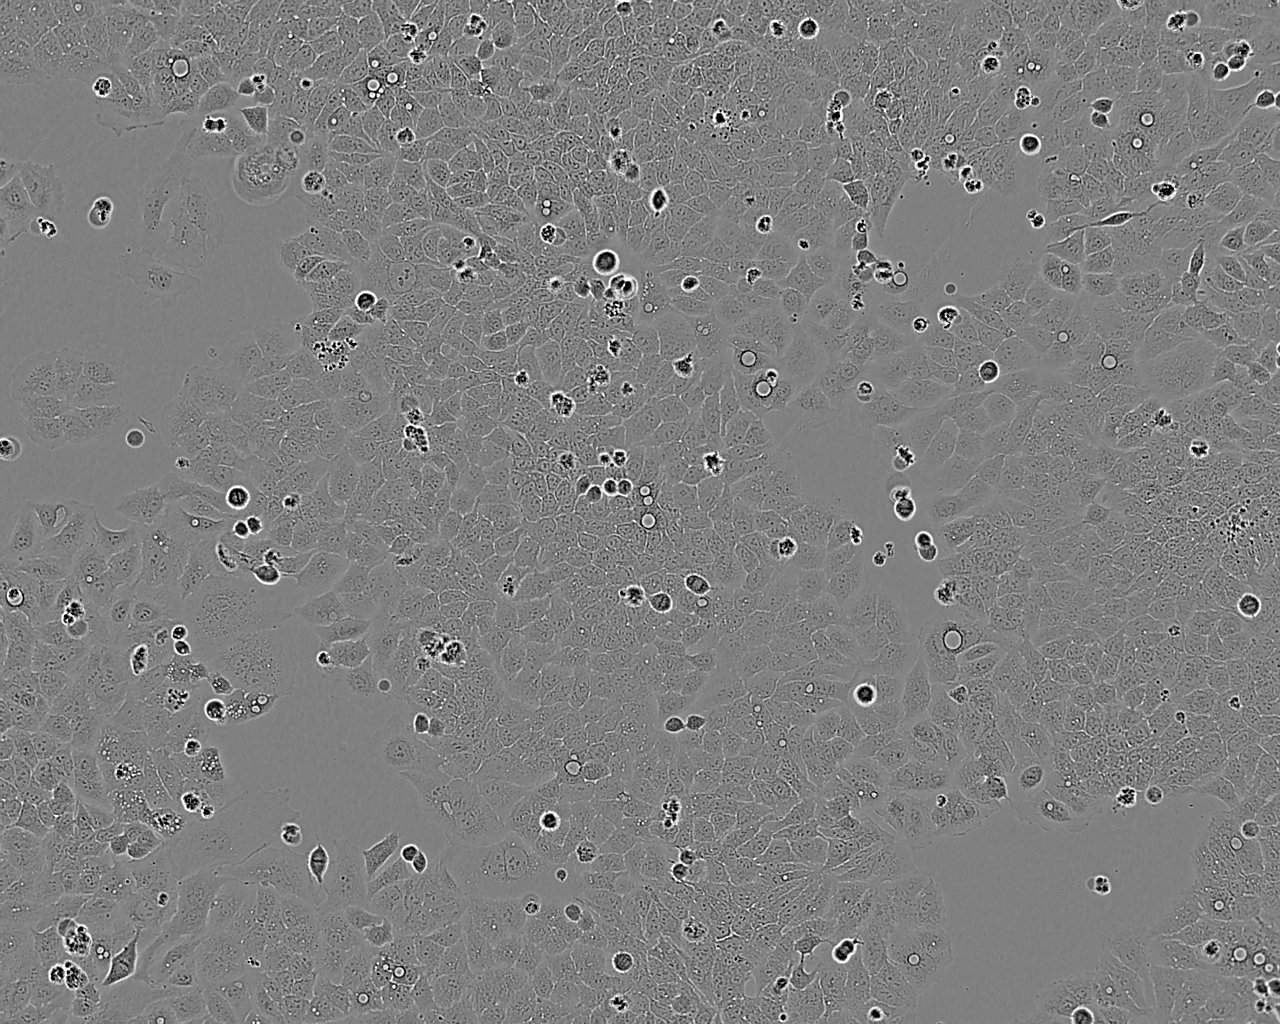 BPH-1 epithelioid cells人前列腺增生细胞系